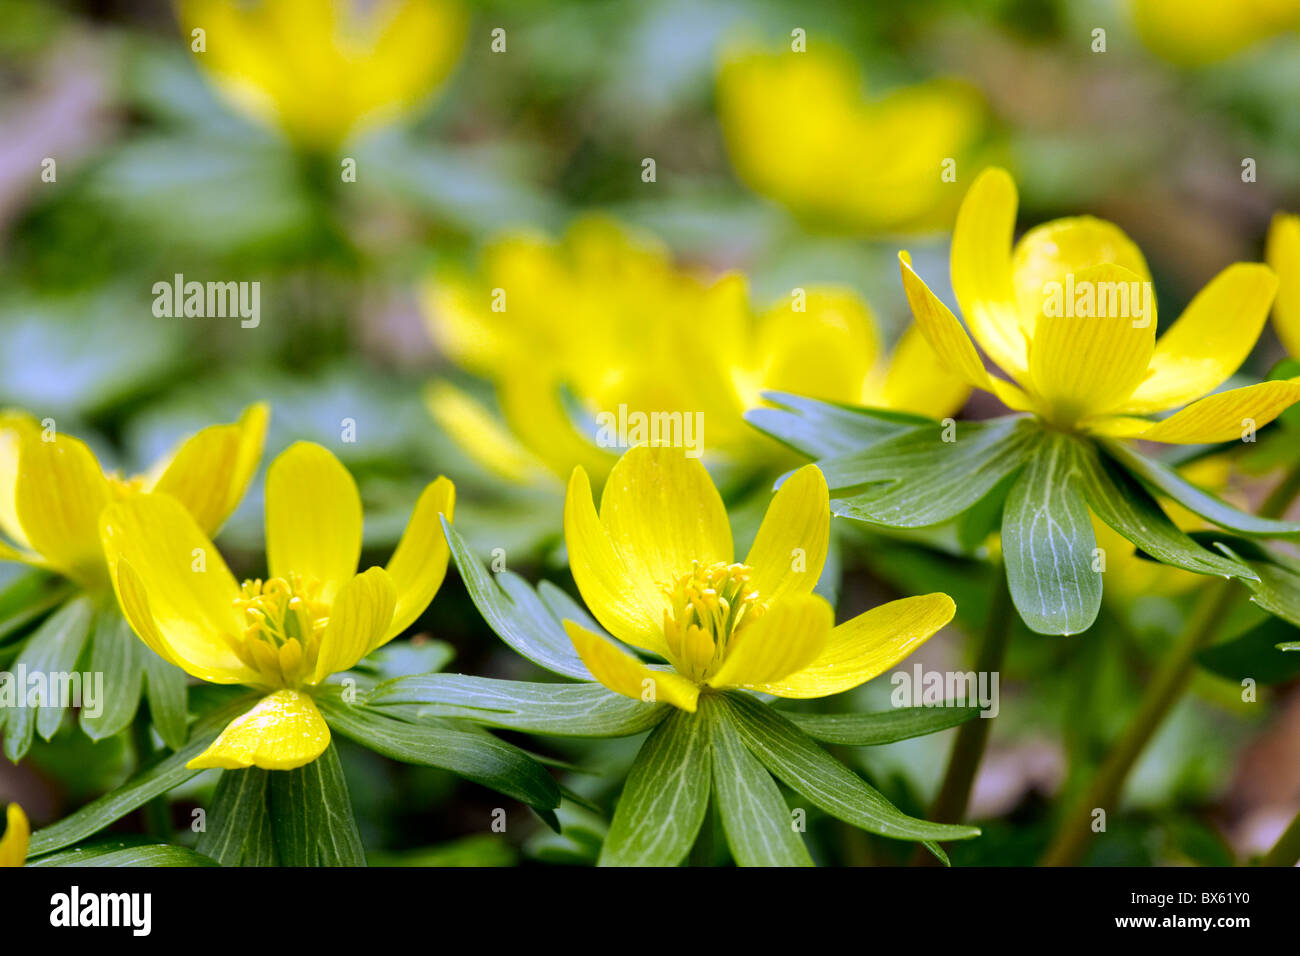 Flowers of winter aconite Latin name Eranthis hyemalis Stock Photo - Alamy